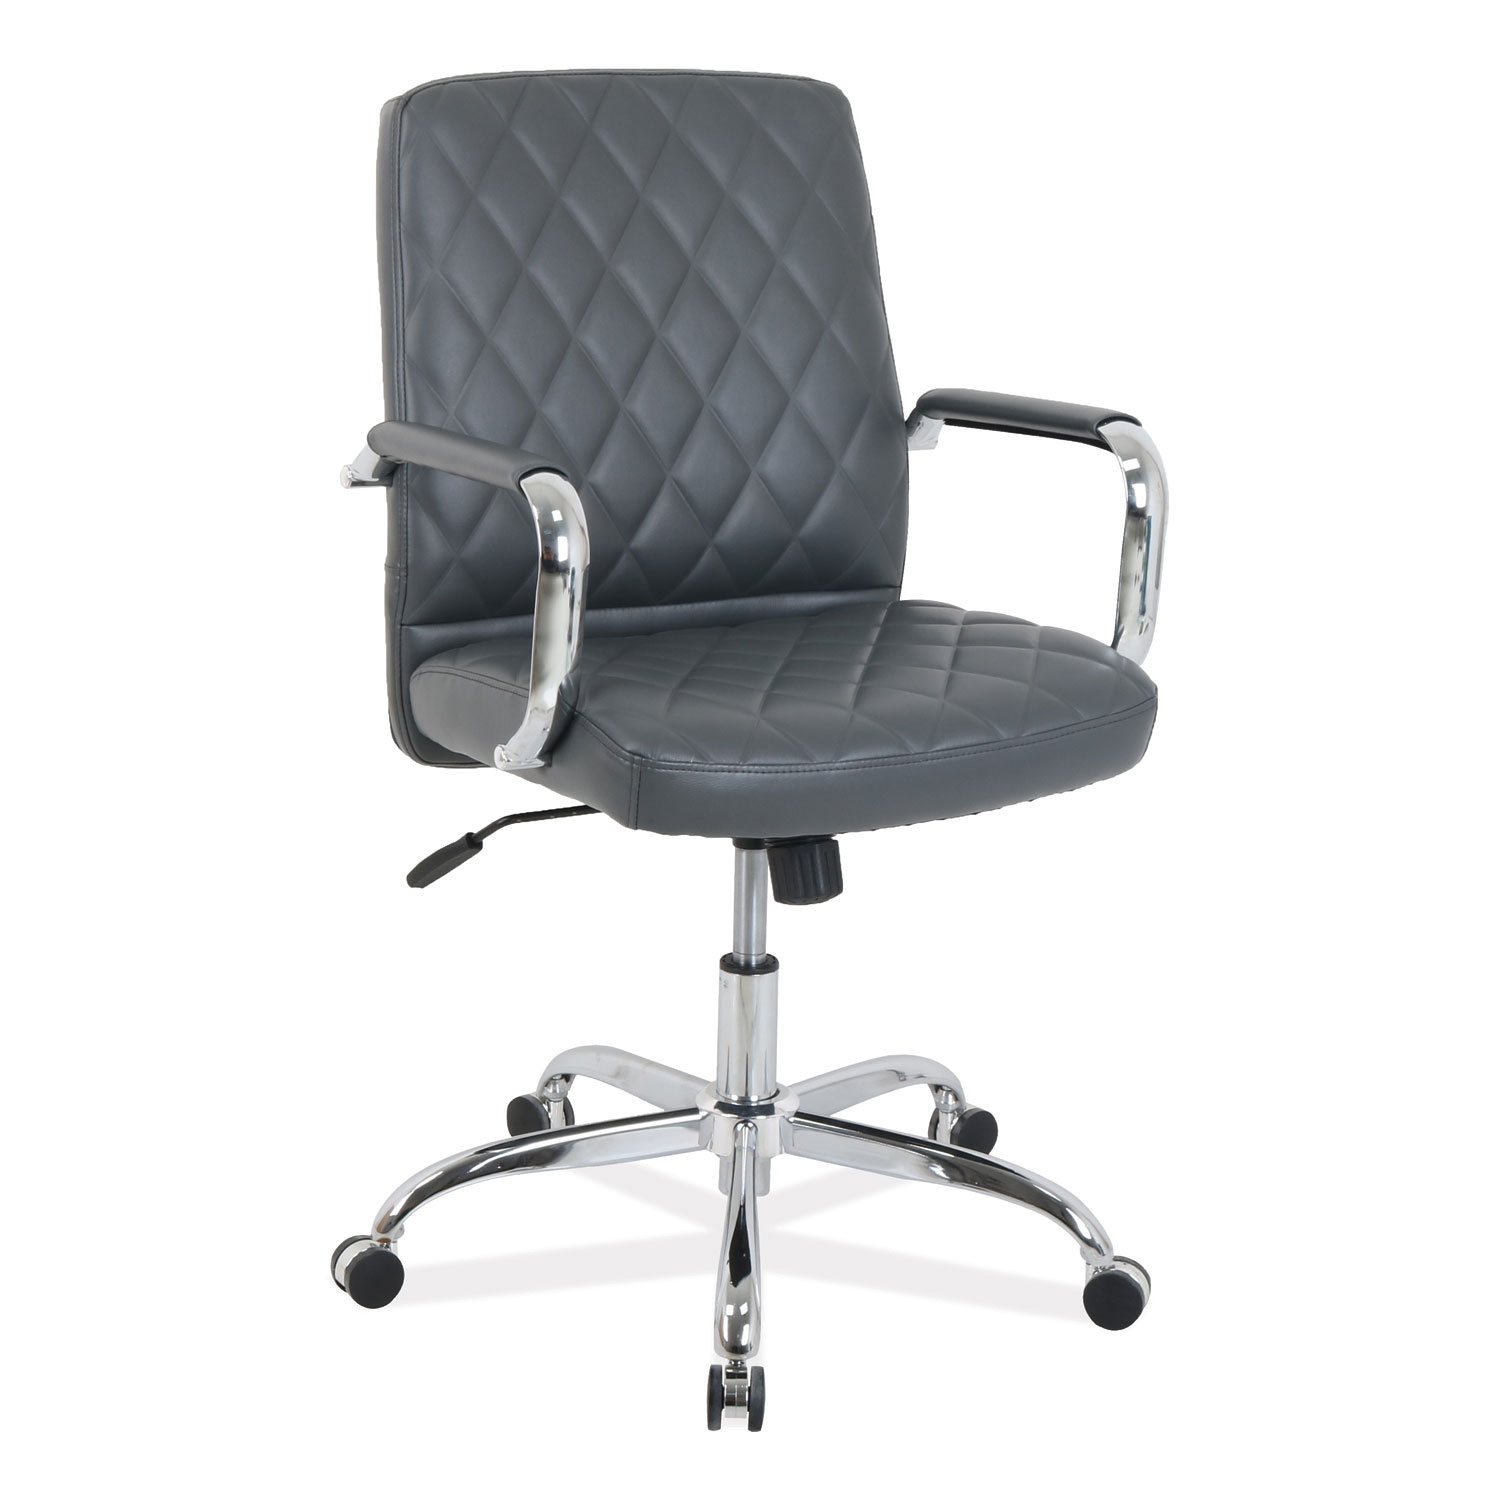  kathy ireland OFFICE by Alera KA54249 kathy ireland OFFICE by Alera Nebulous Mid-Back Diamond-Embossed Leather Chair, Up to 275 lbs., Gray Seat, Chrome Base (ALEKA54249) 